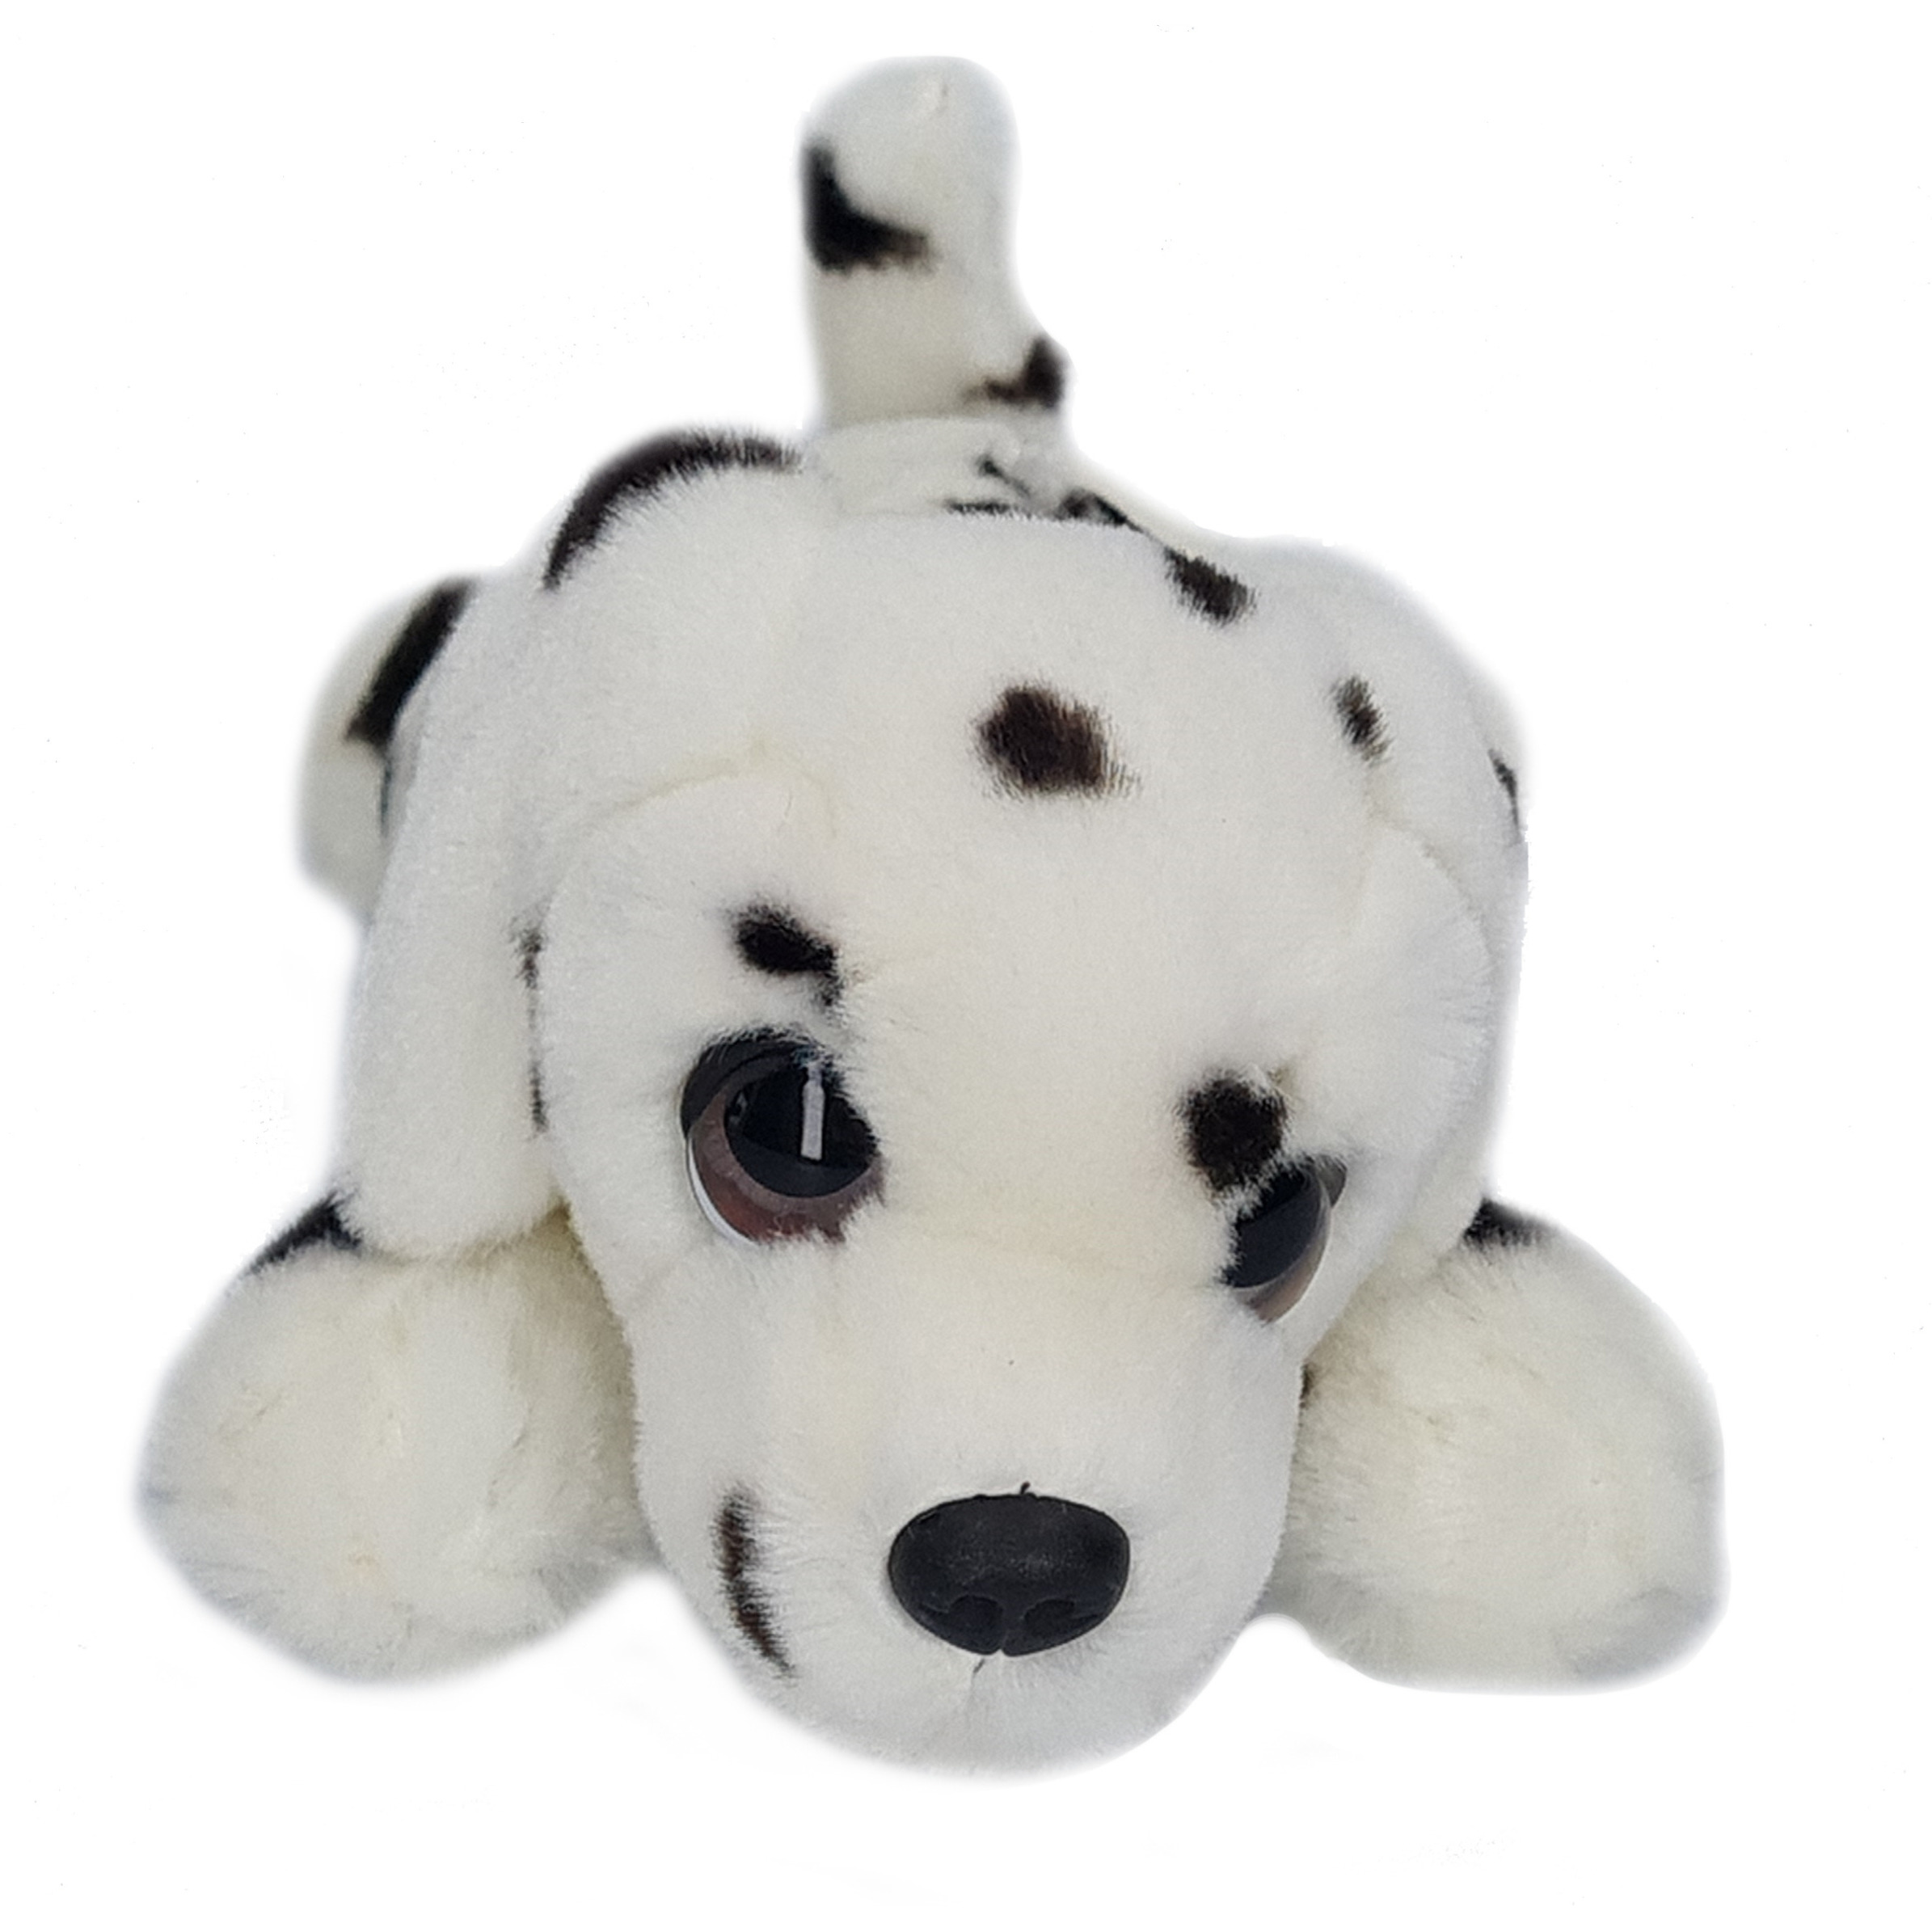 Keel Toys Pluche wit met zwarte stippen Dalmatier honden knuffel 25 cm -